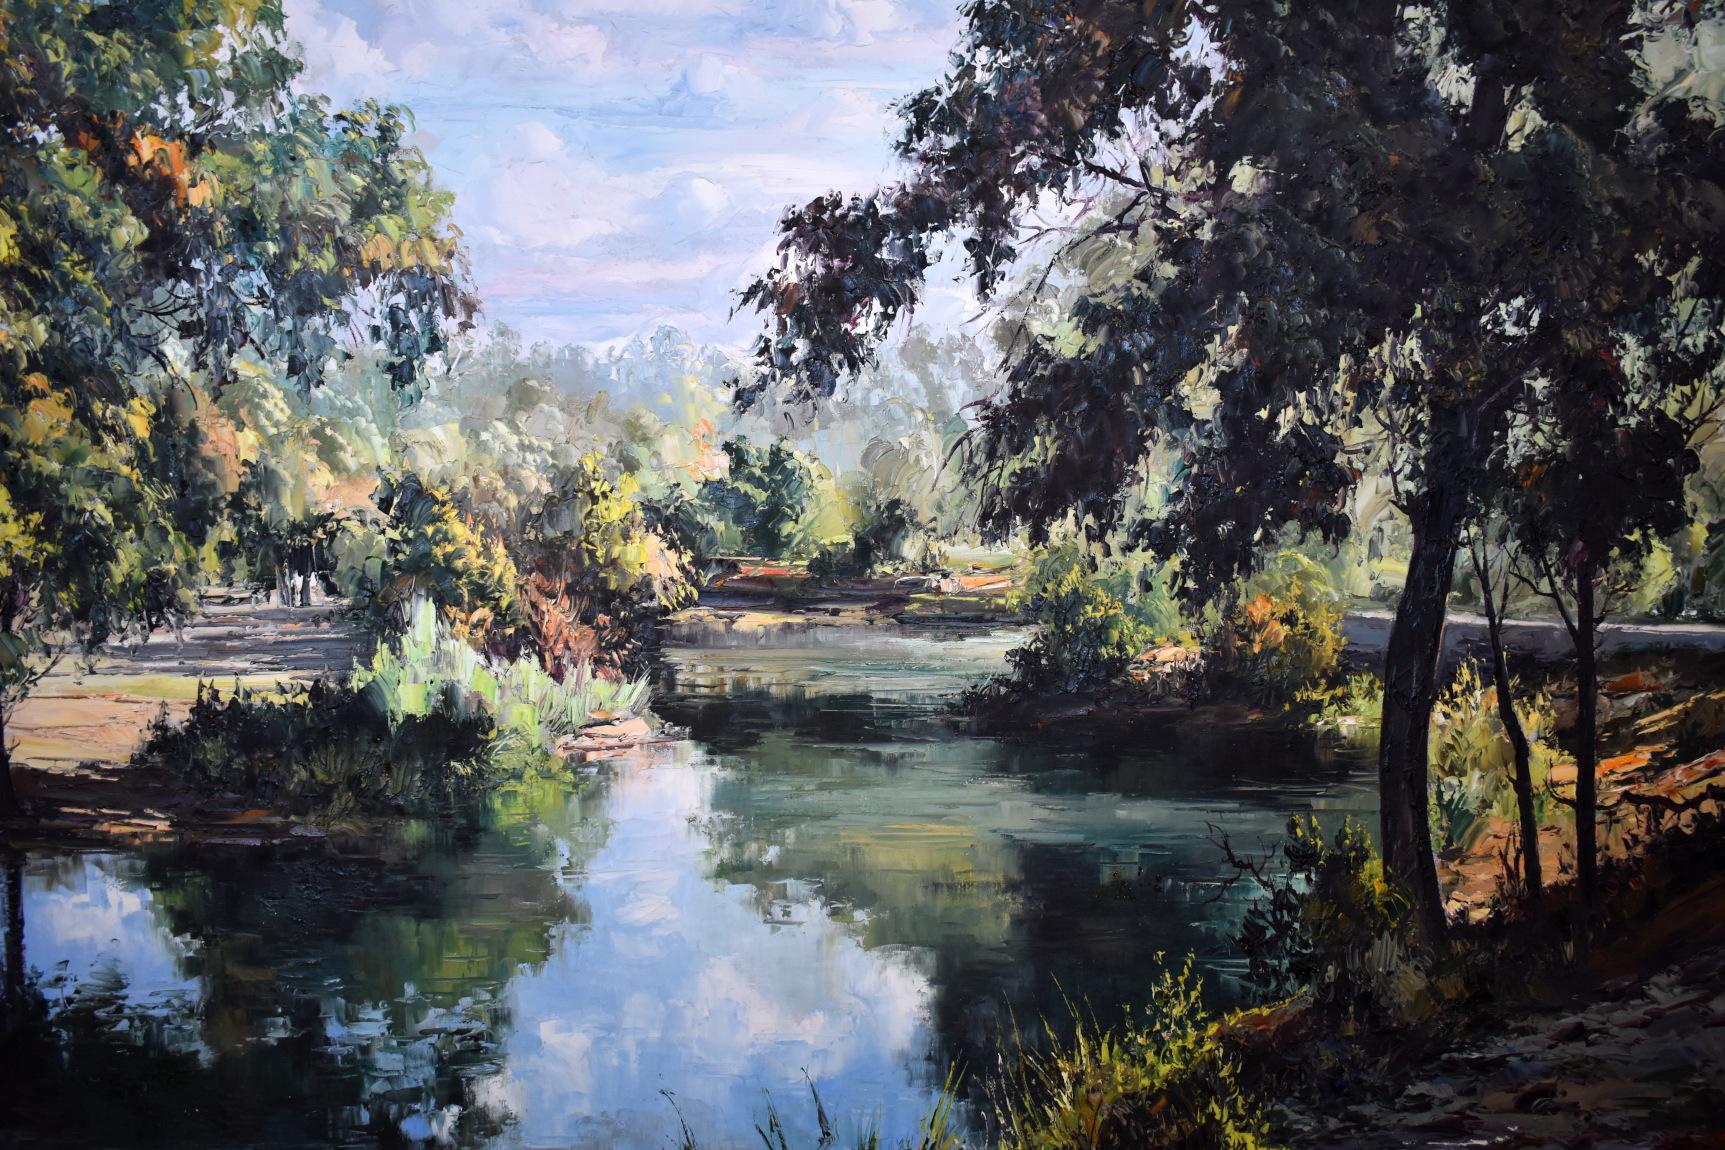 Jose Vives-Atsara Landscape Painting - "MORNING AT BRACKENRIDGE PARK" SAN ANTONIO TEXAS PALETTE KNIFE PAINTING 69 X 103